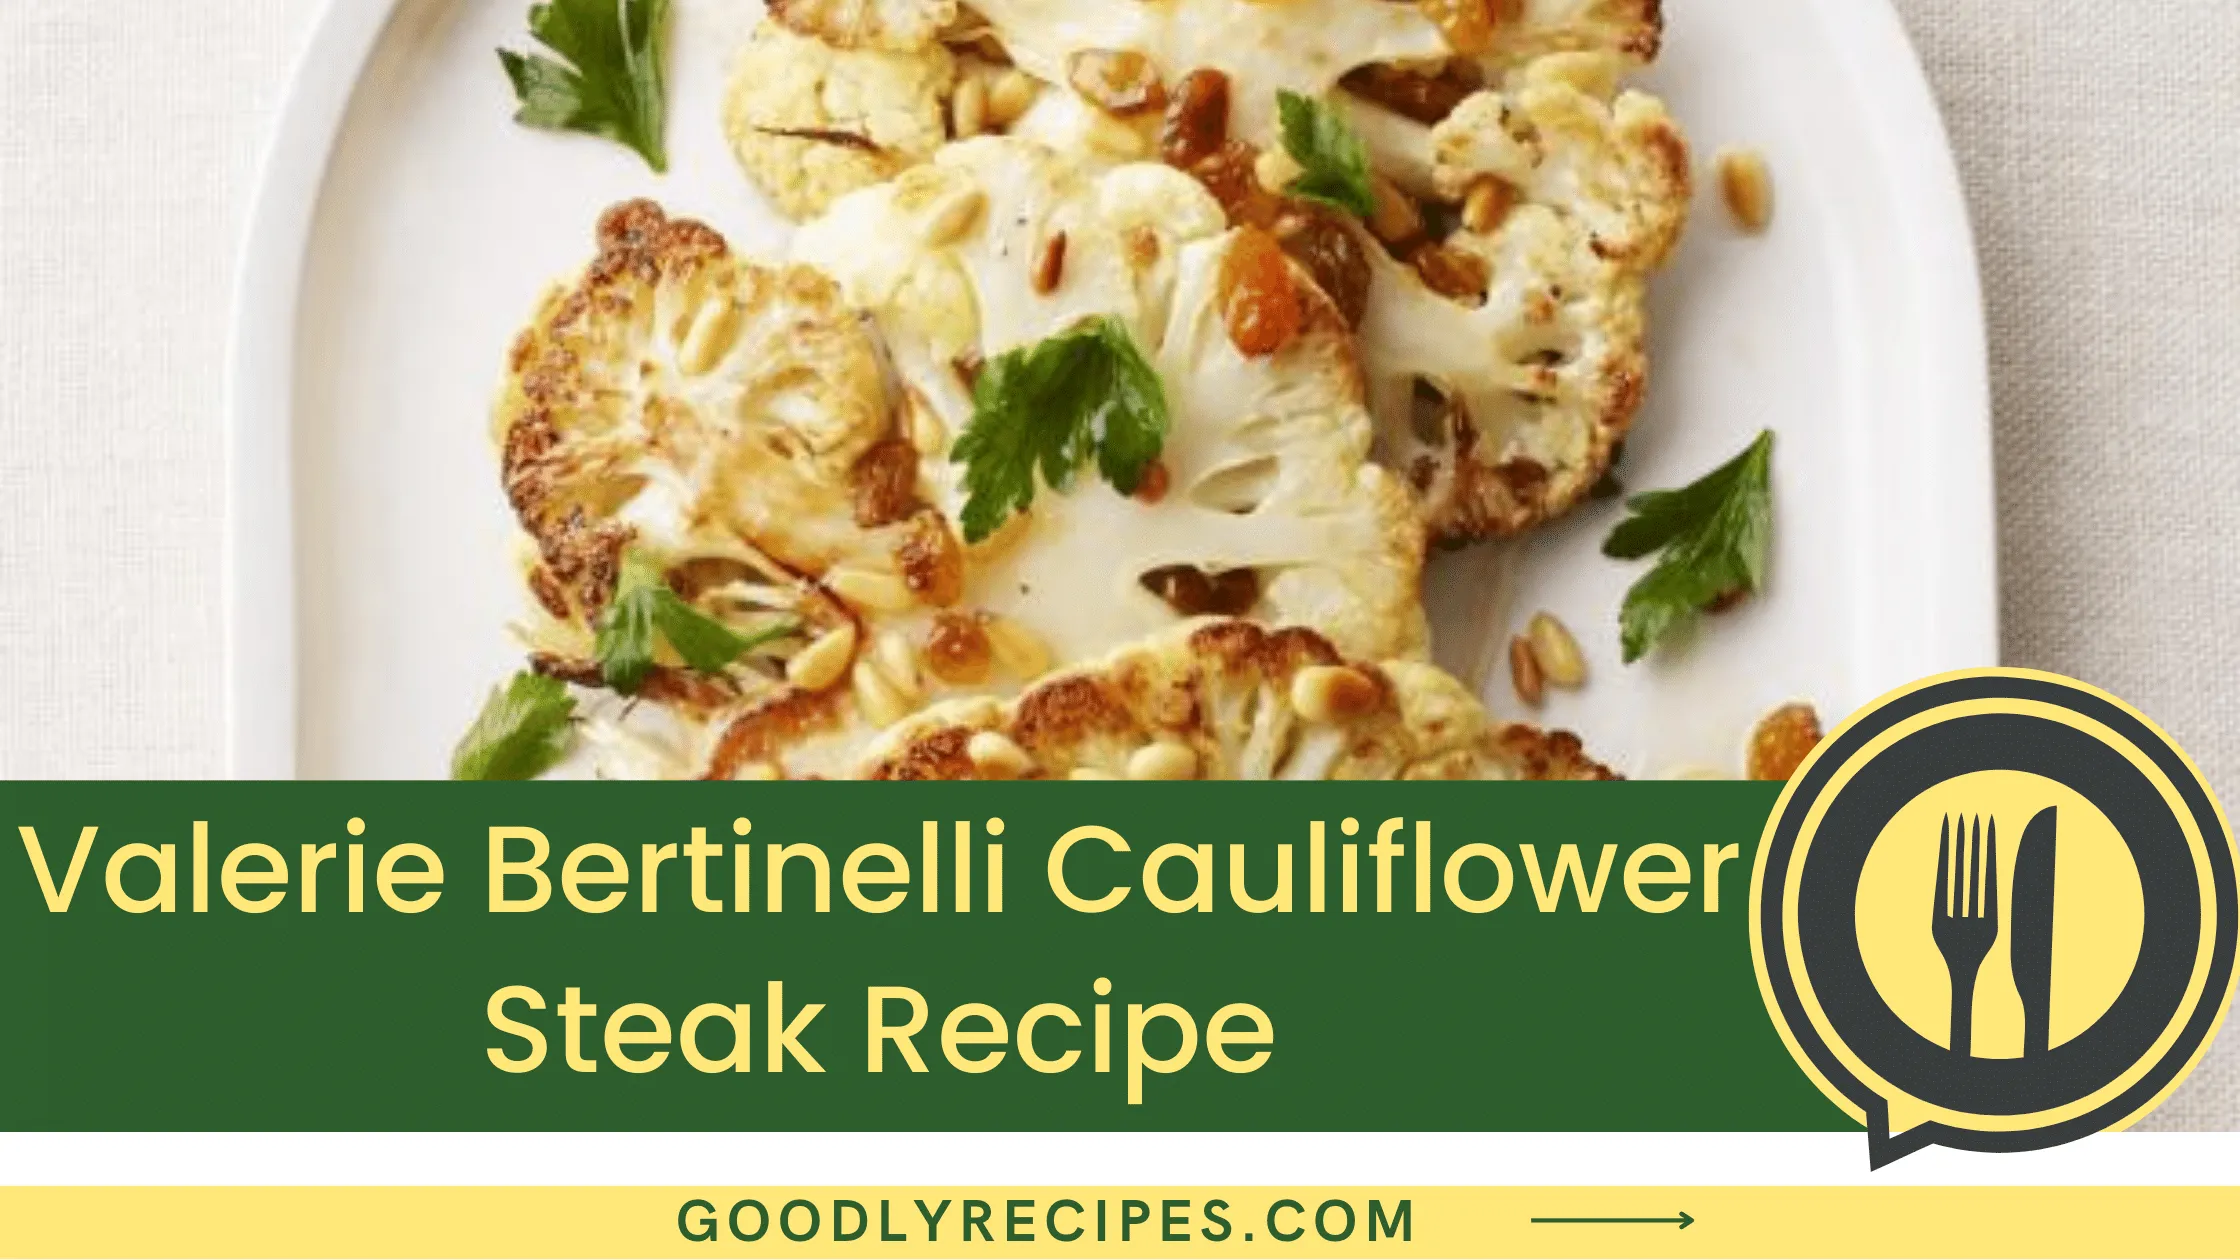 Valerie Bertinelli Cauliflower Steak Recipe - For Food Lovers